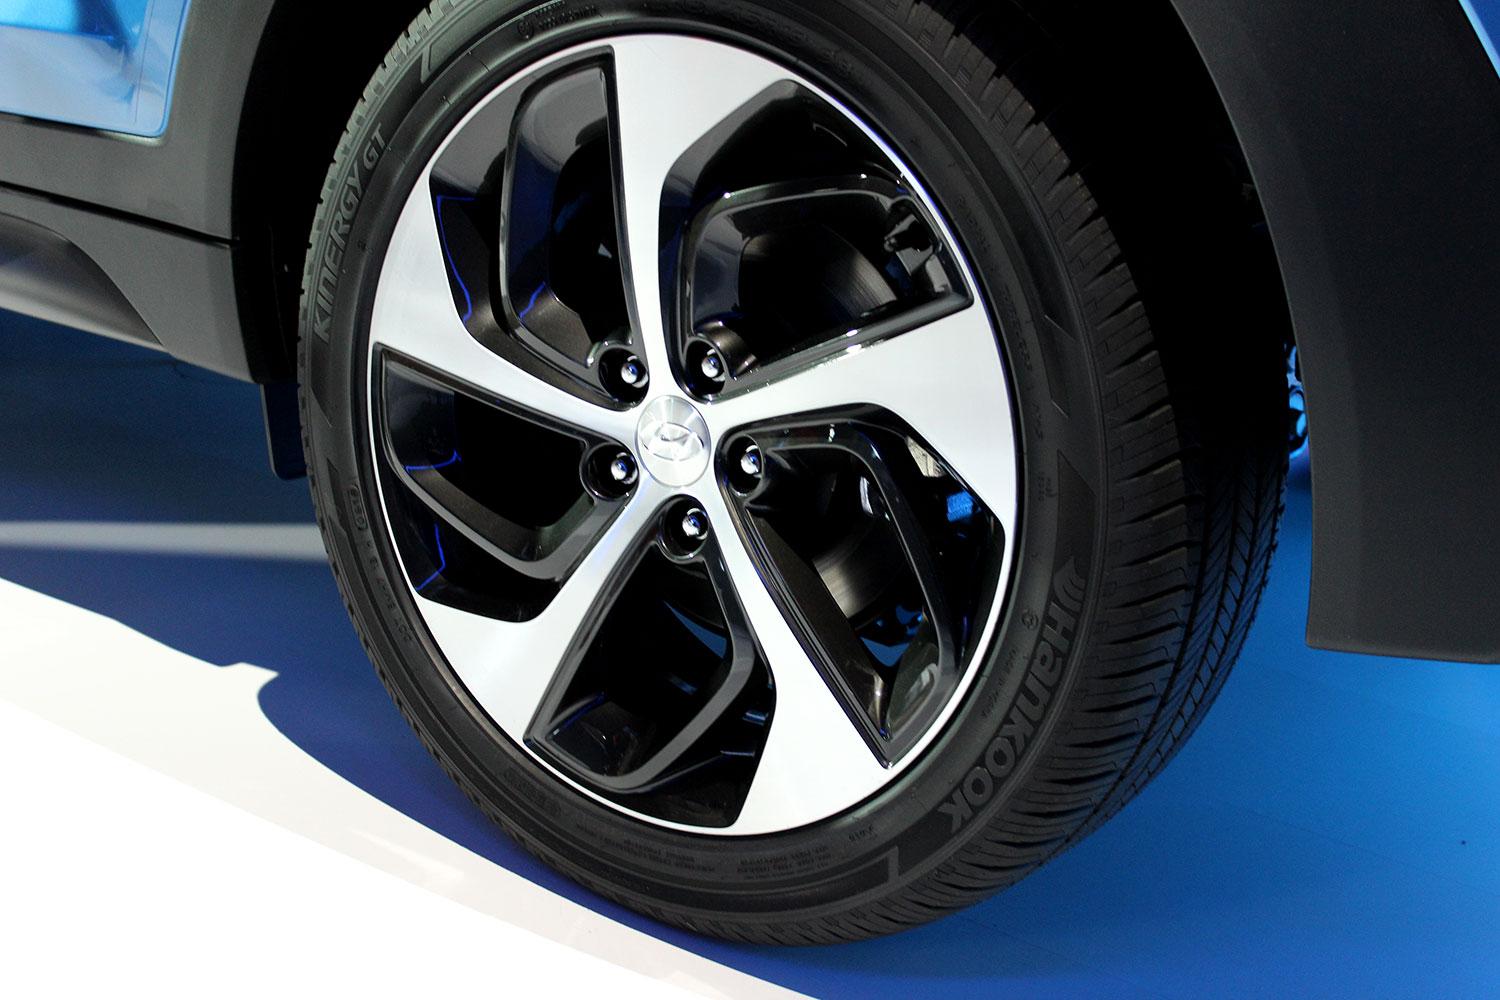 2016 Hyundai Tuscon tire detail